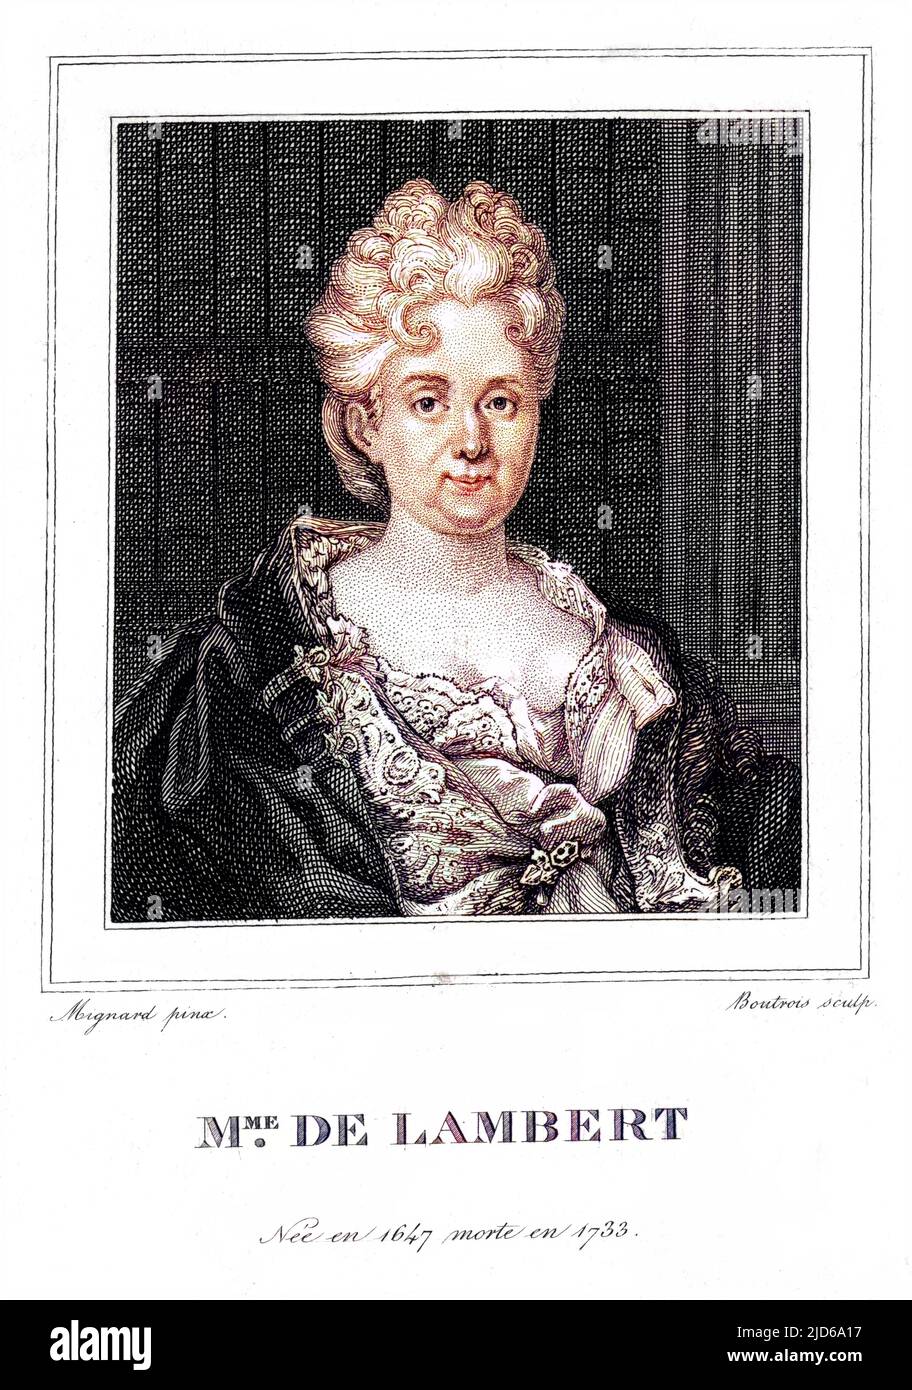 ANNE THERESE de MARGUENART de COURCELLES, marquise de LAMBERT scrittore francese in materia di istruzione. Versione colorata di : 10162616 Data: 1647 - 1733 Foto Stock